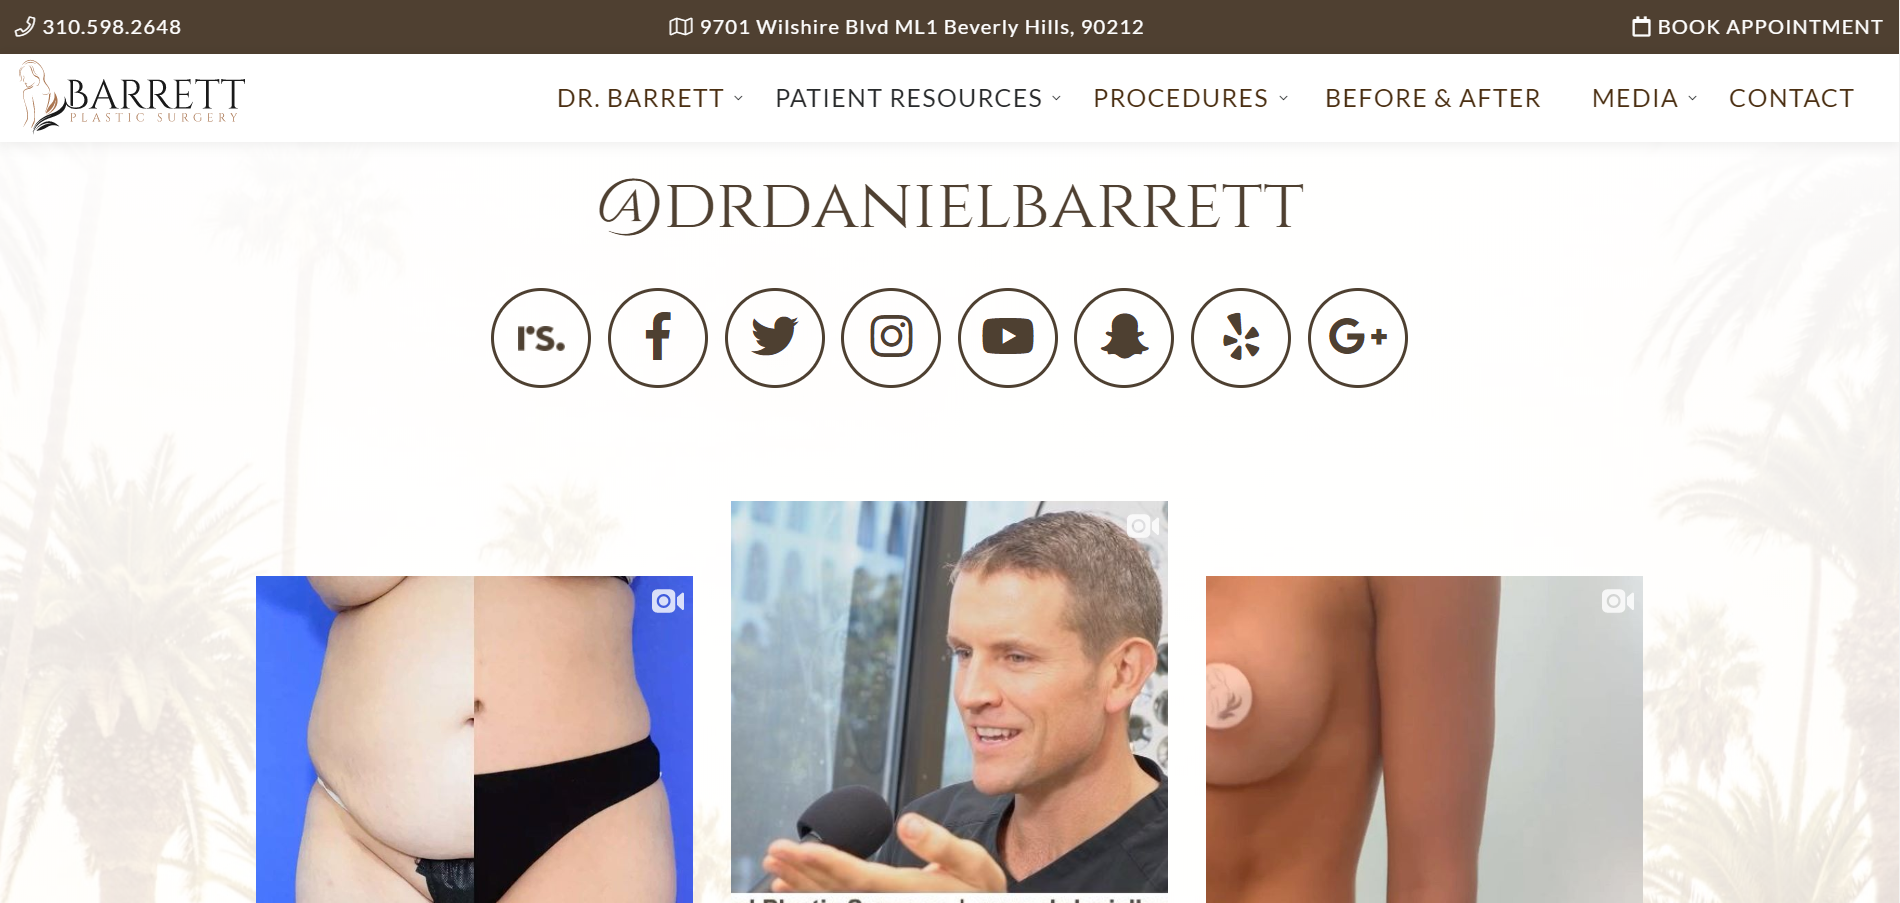 the social media feed on the custom barrett plastic surgery website